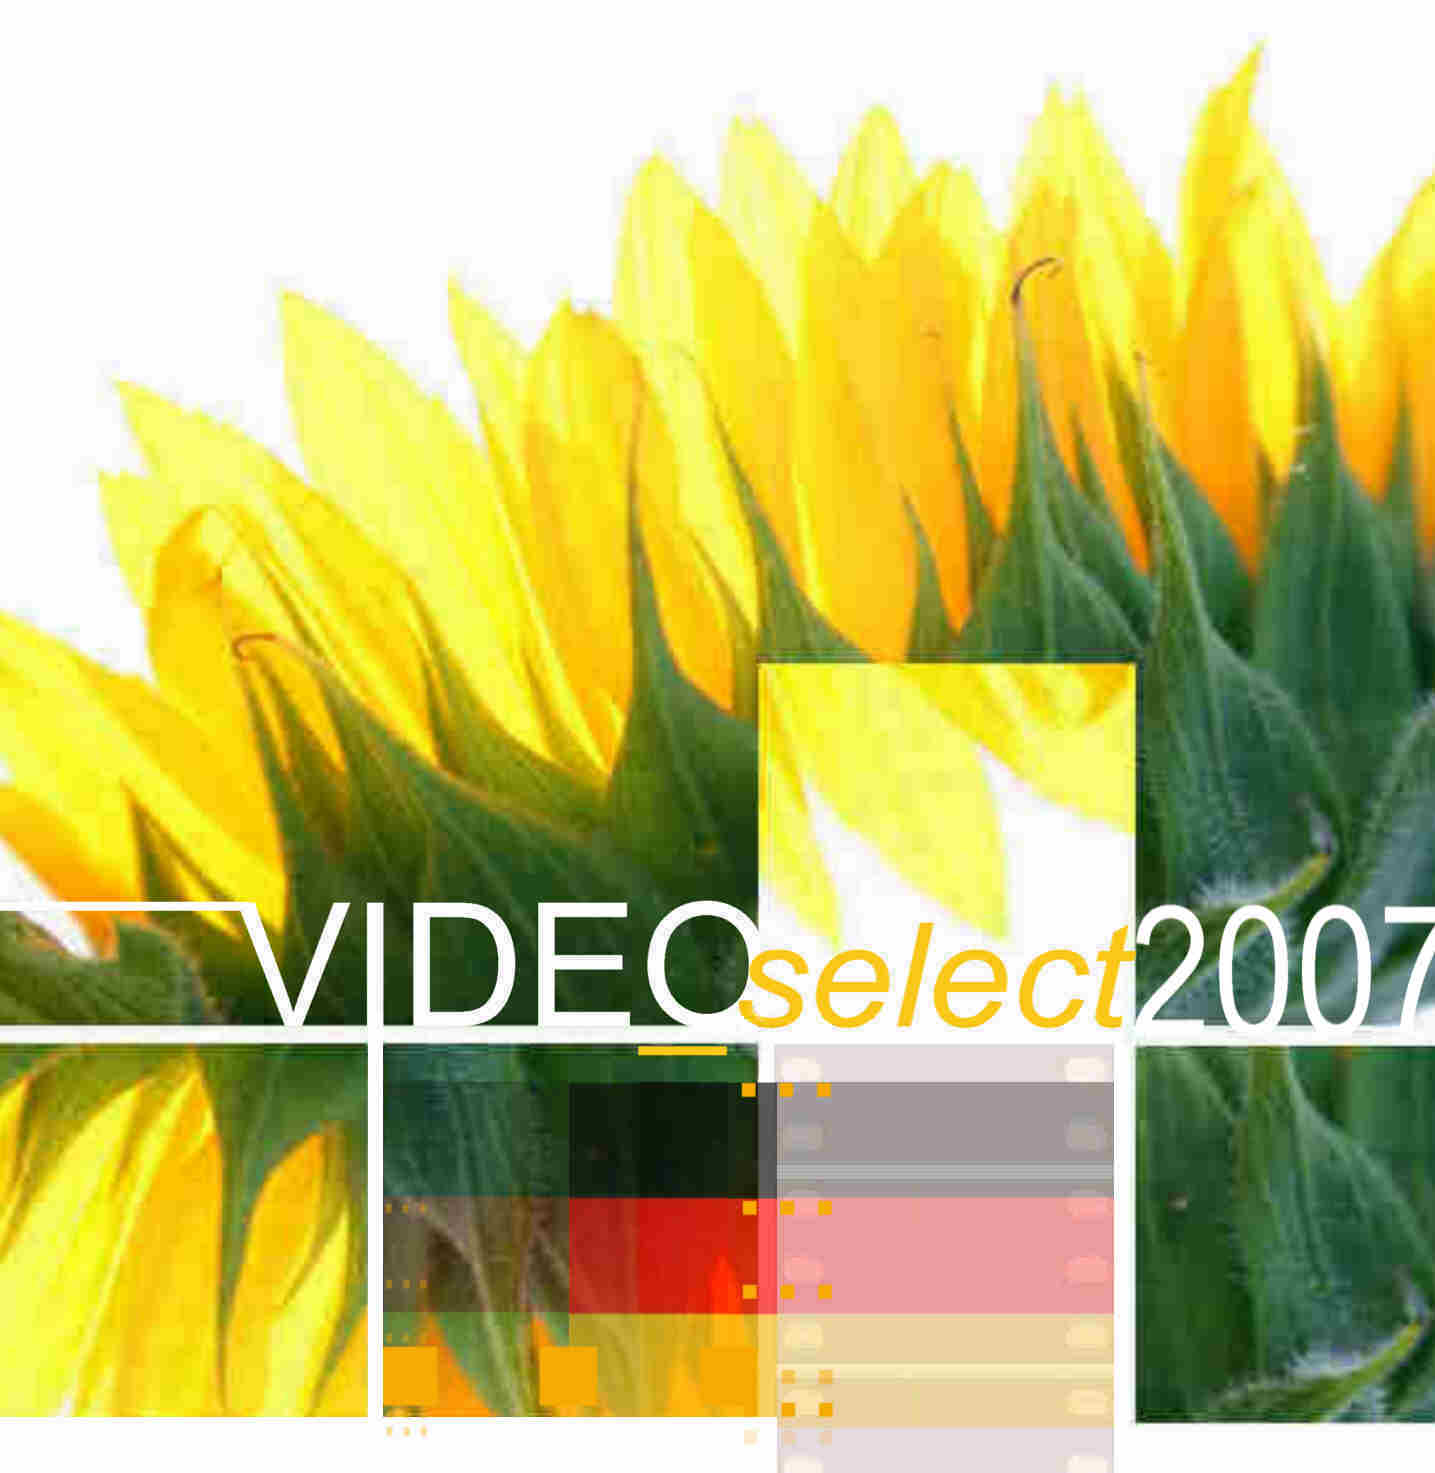 2007 video select logo